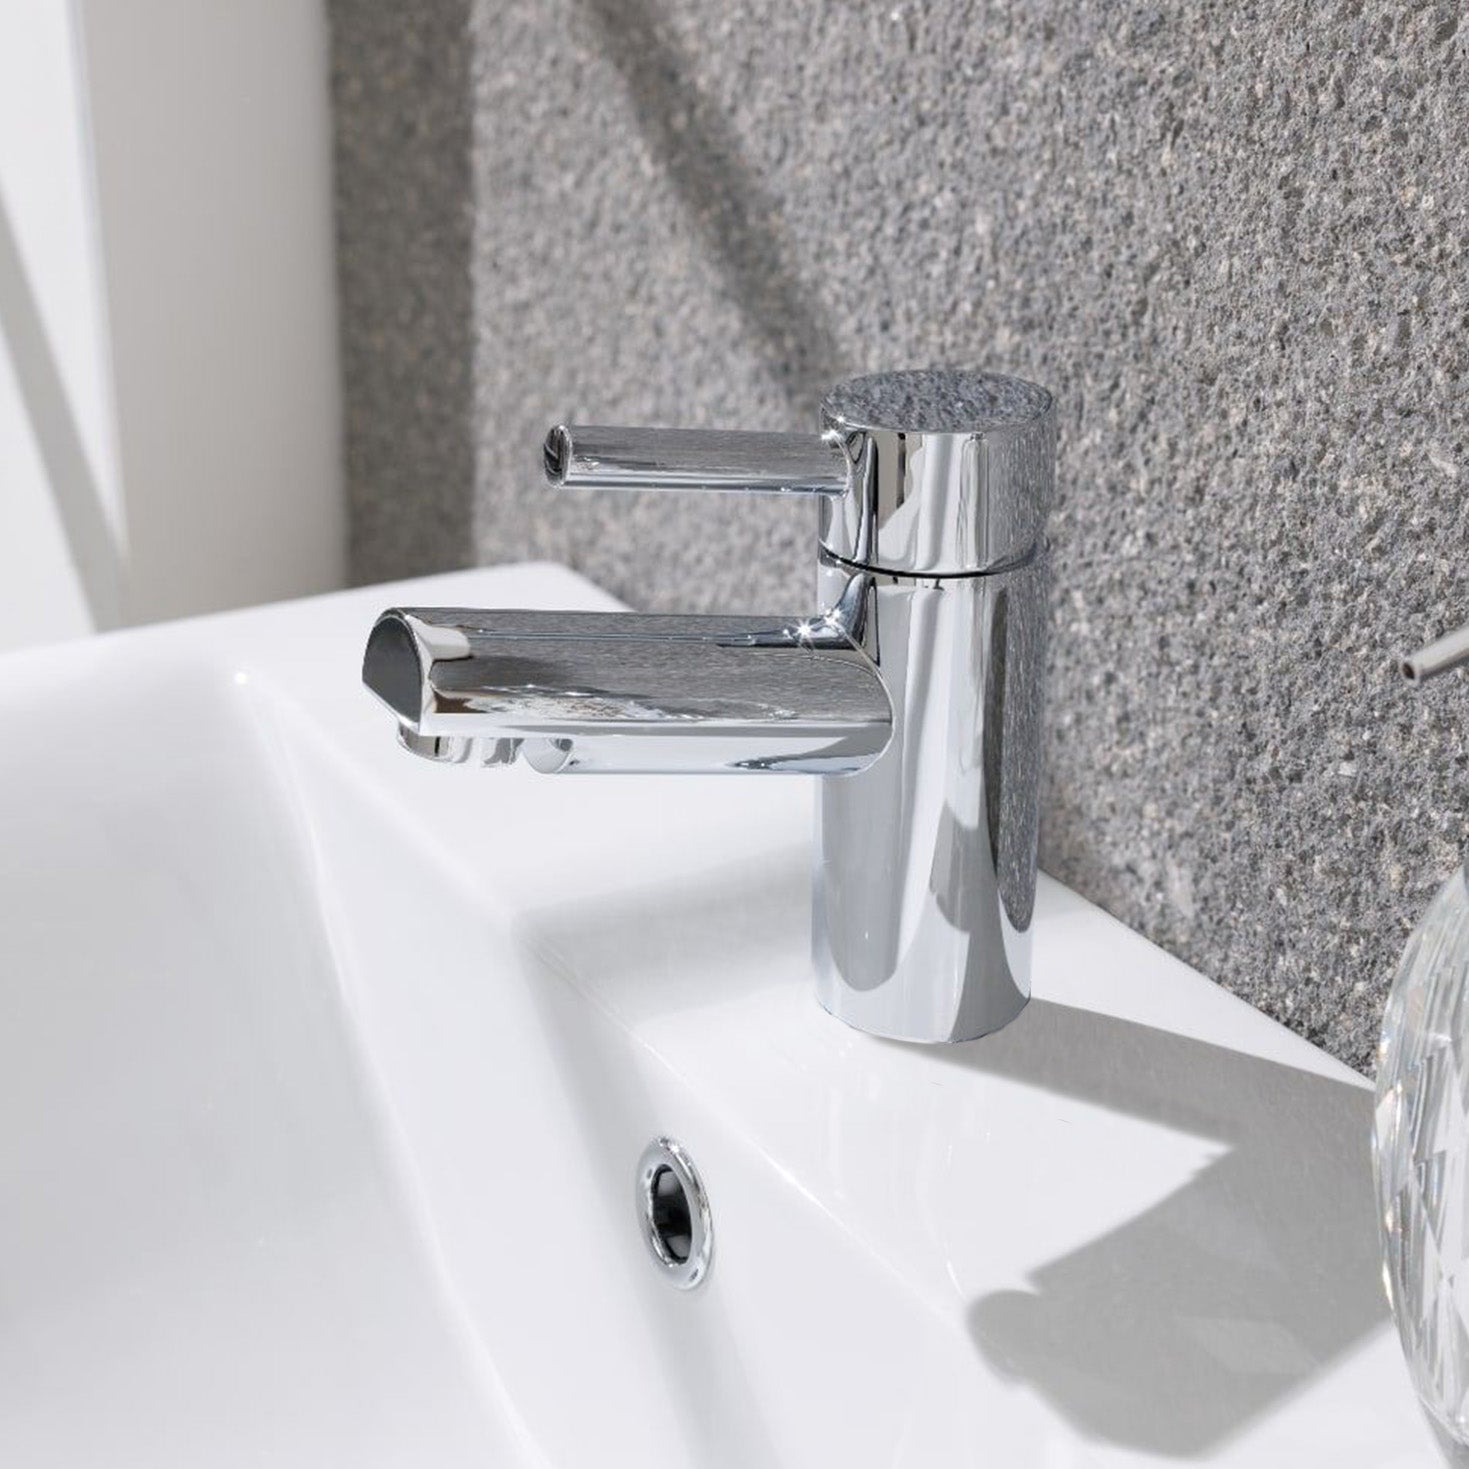 Kyic Bathroom Chrome Basin Sink Single Lever Mixer Tap